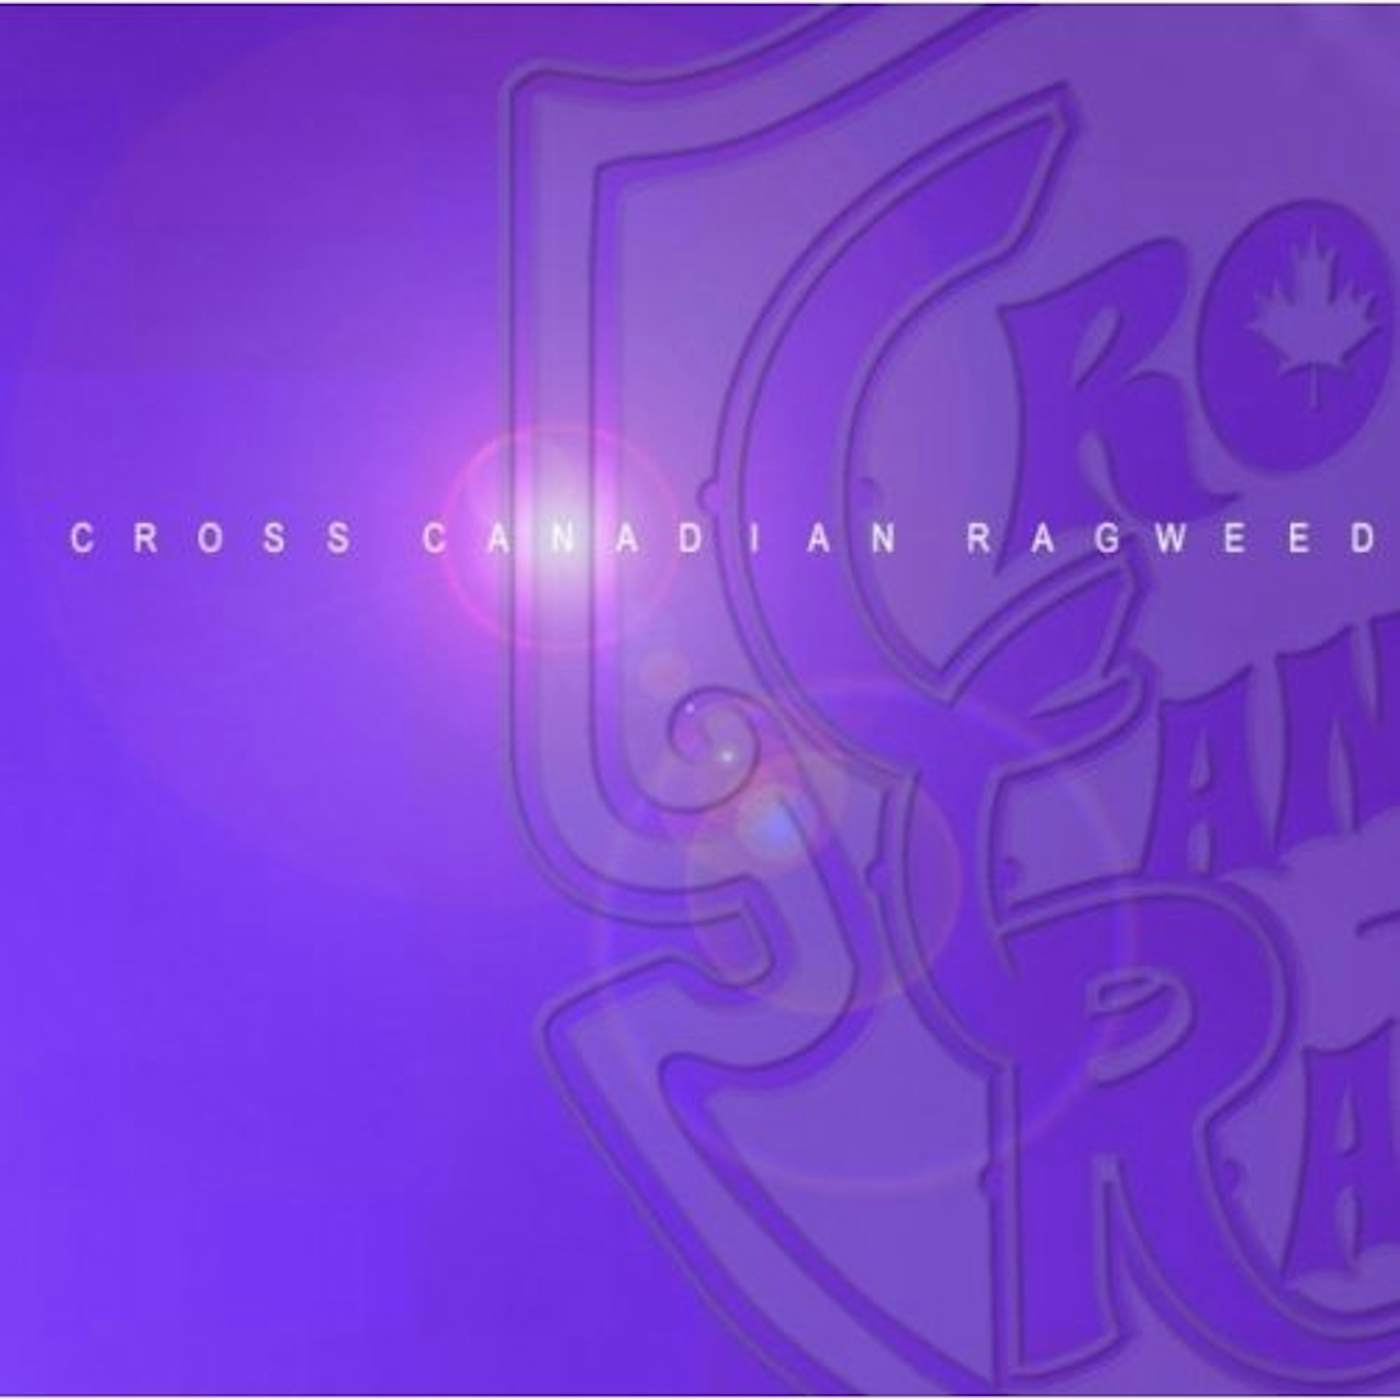 CROSS CANADIAN RAGWEED CD